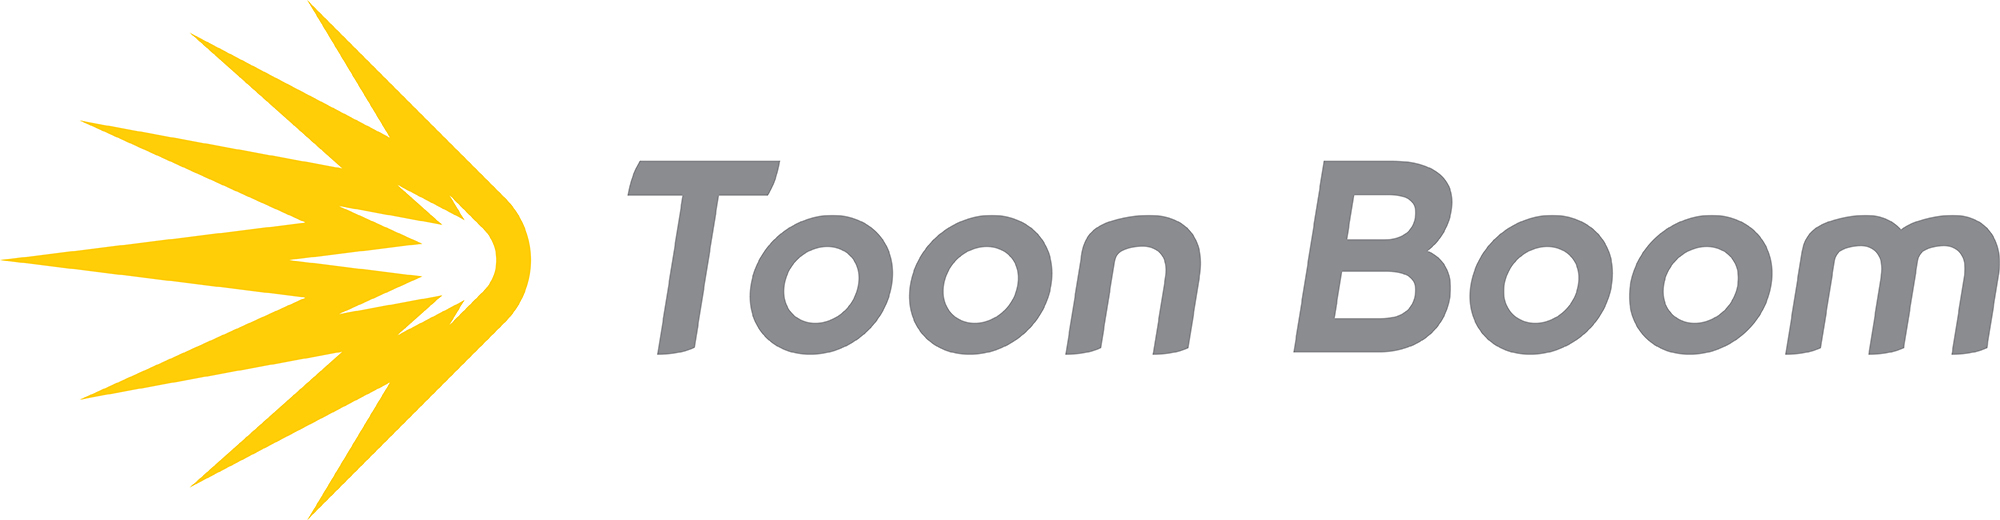 Toon Boom Signs Trig